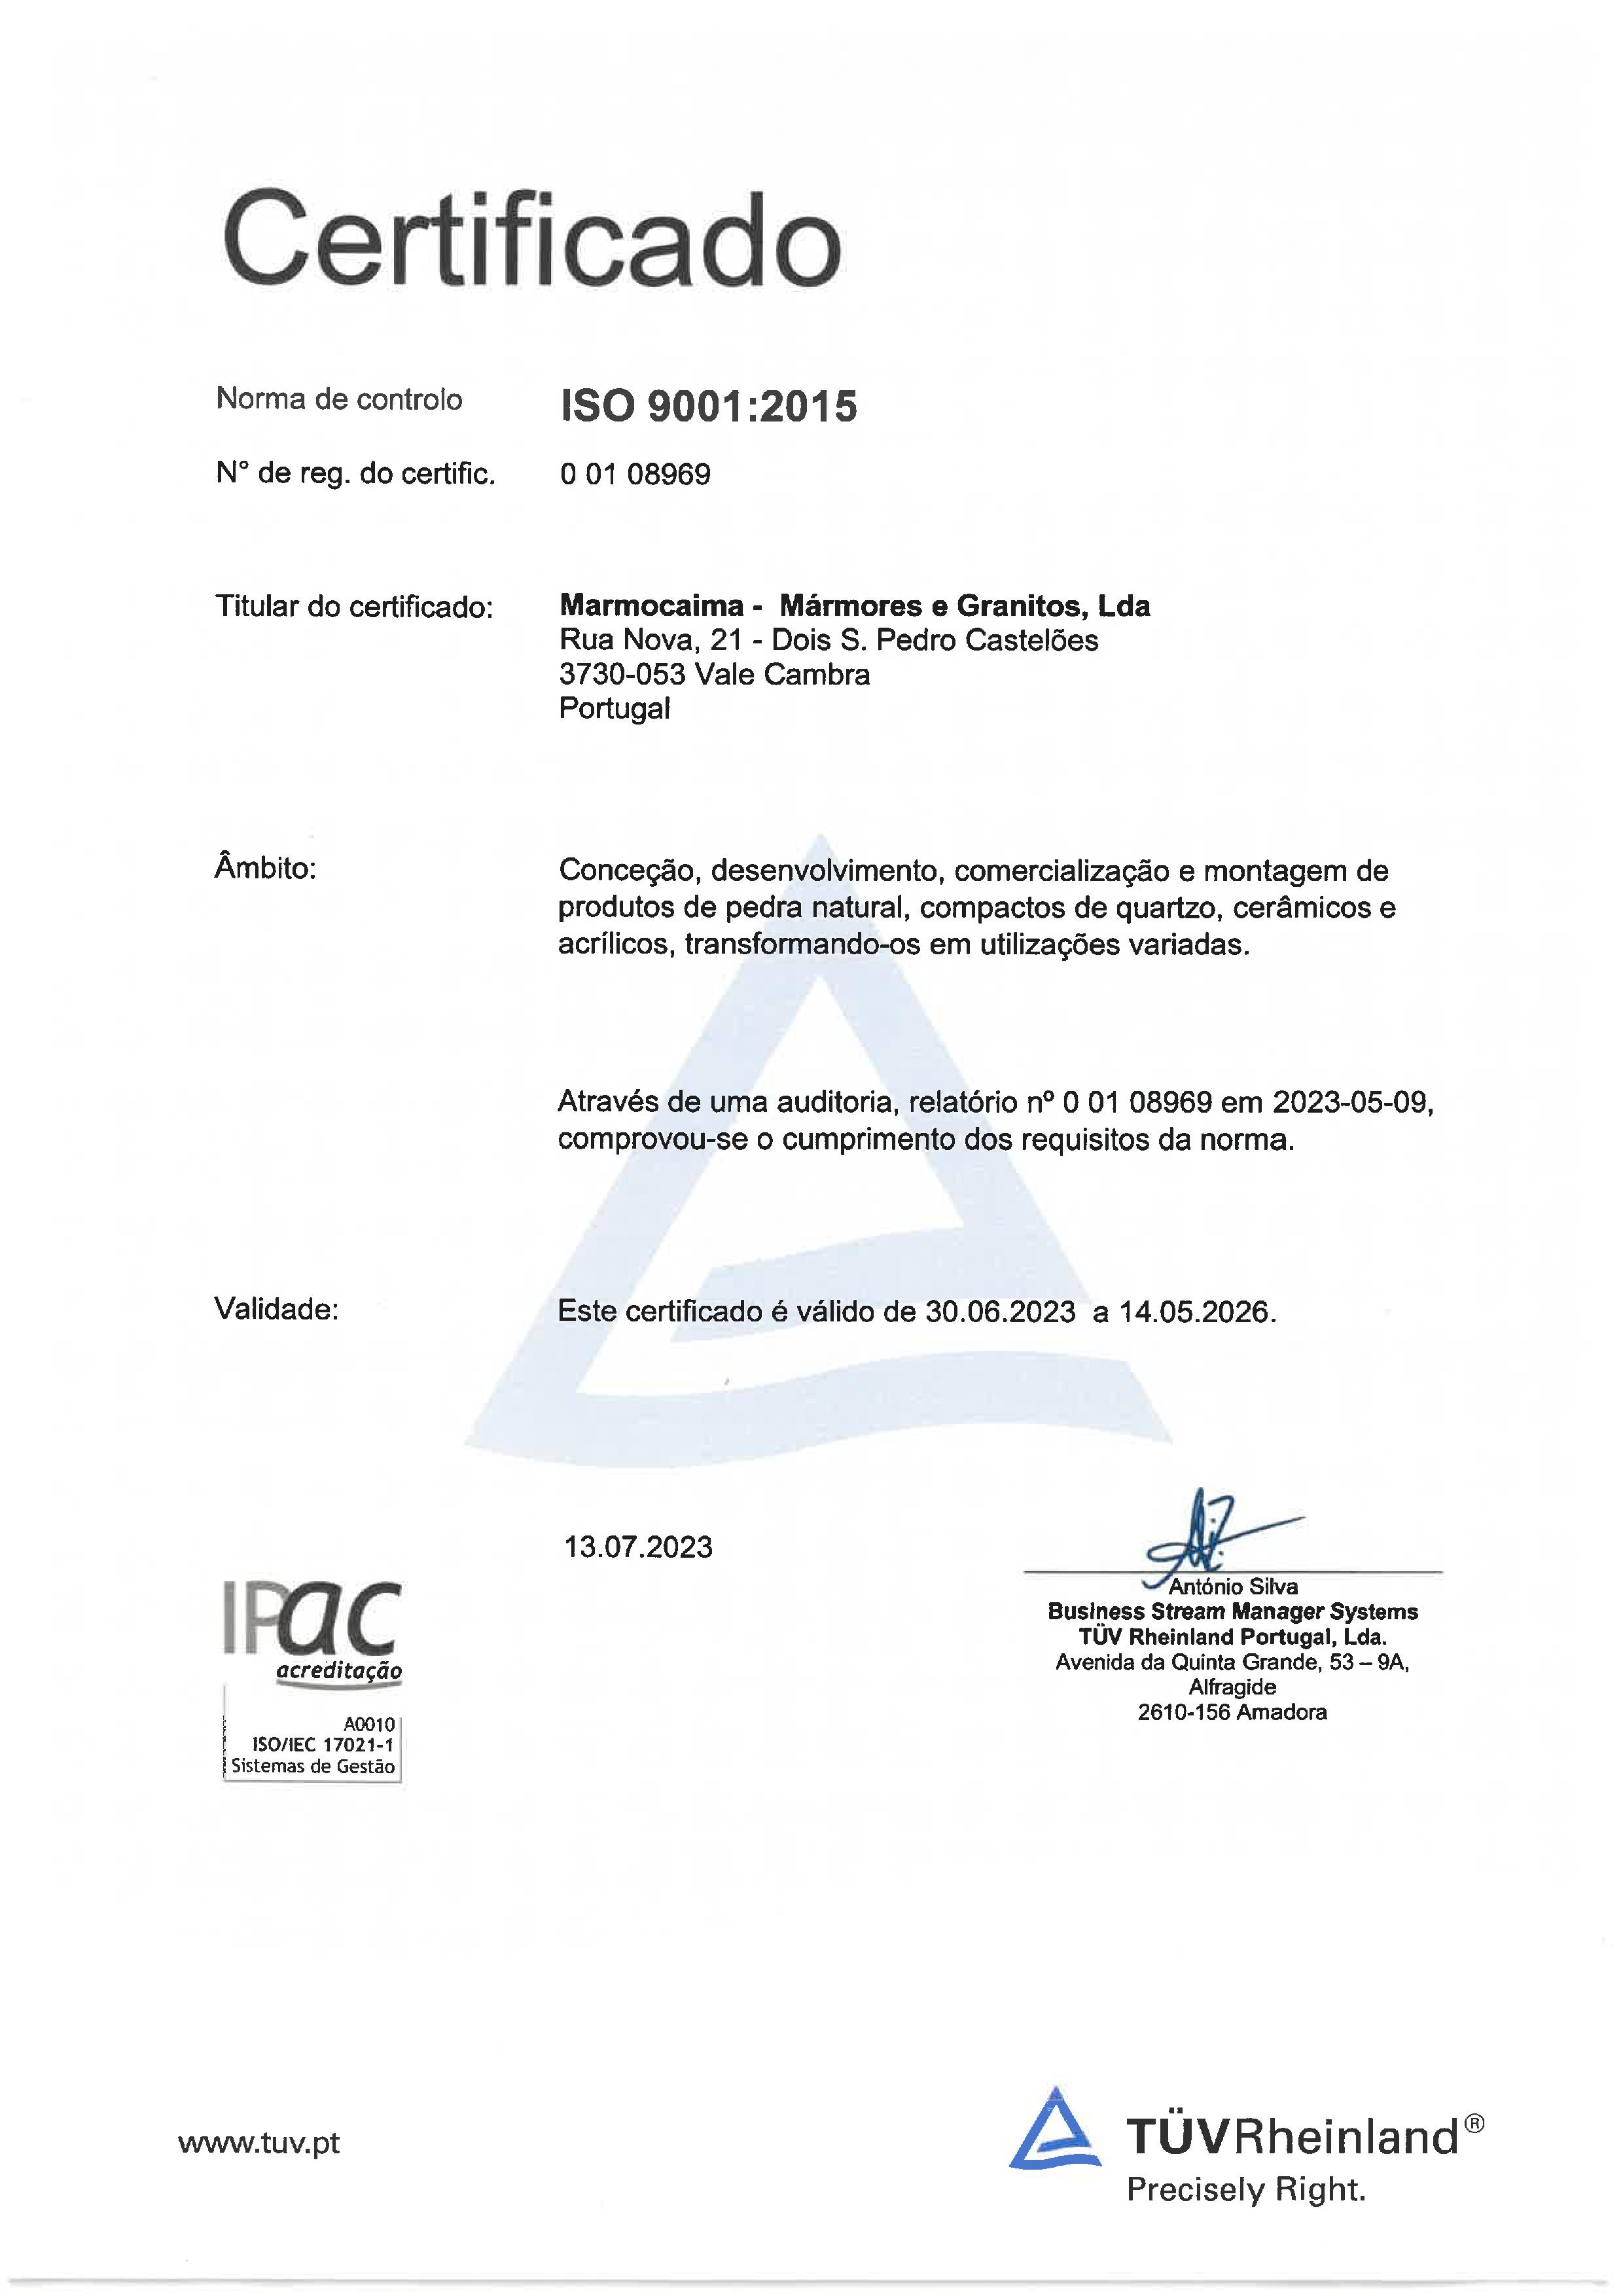 Certificado ISO 9001-2015:Qualidade